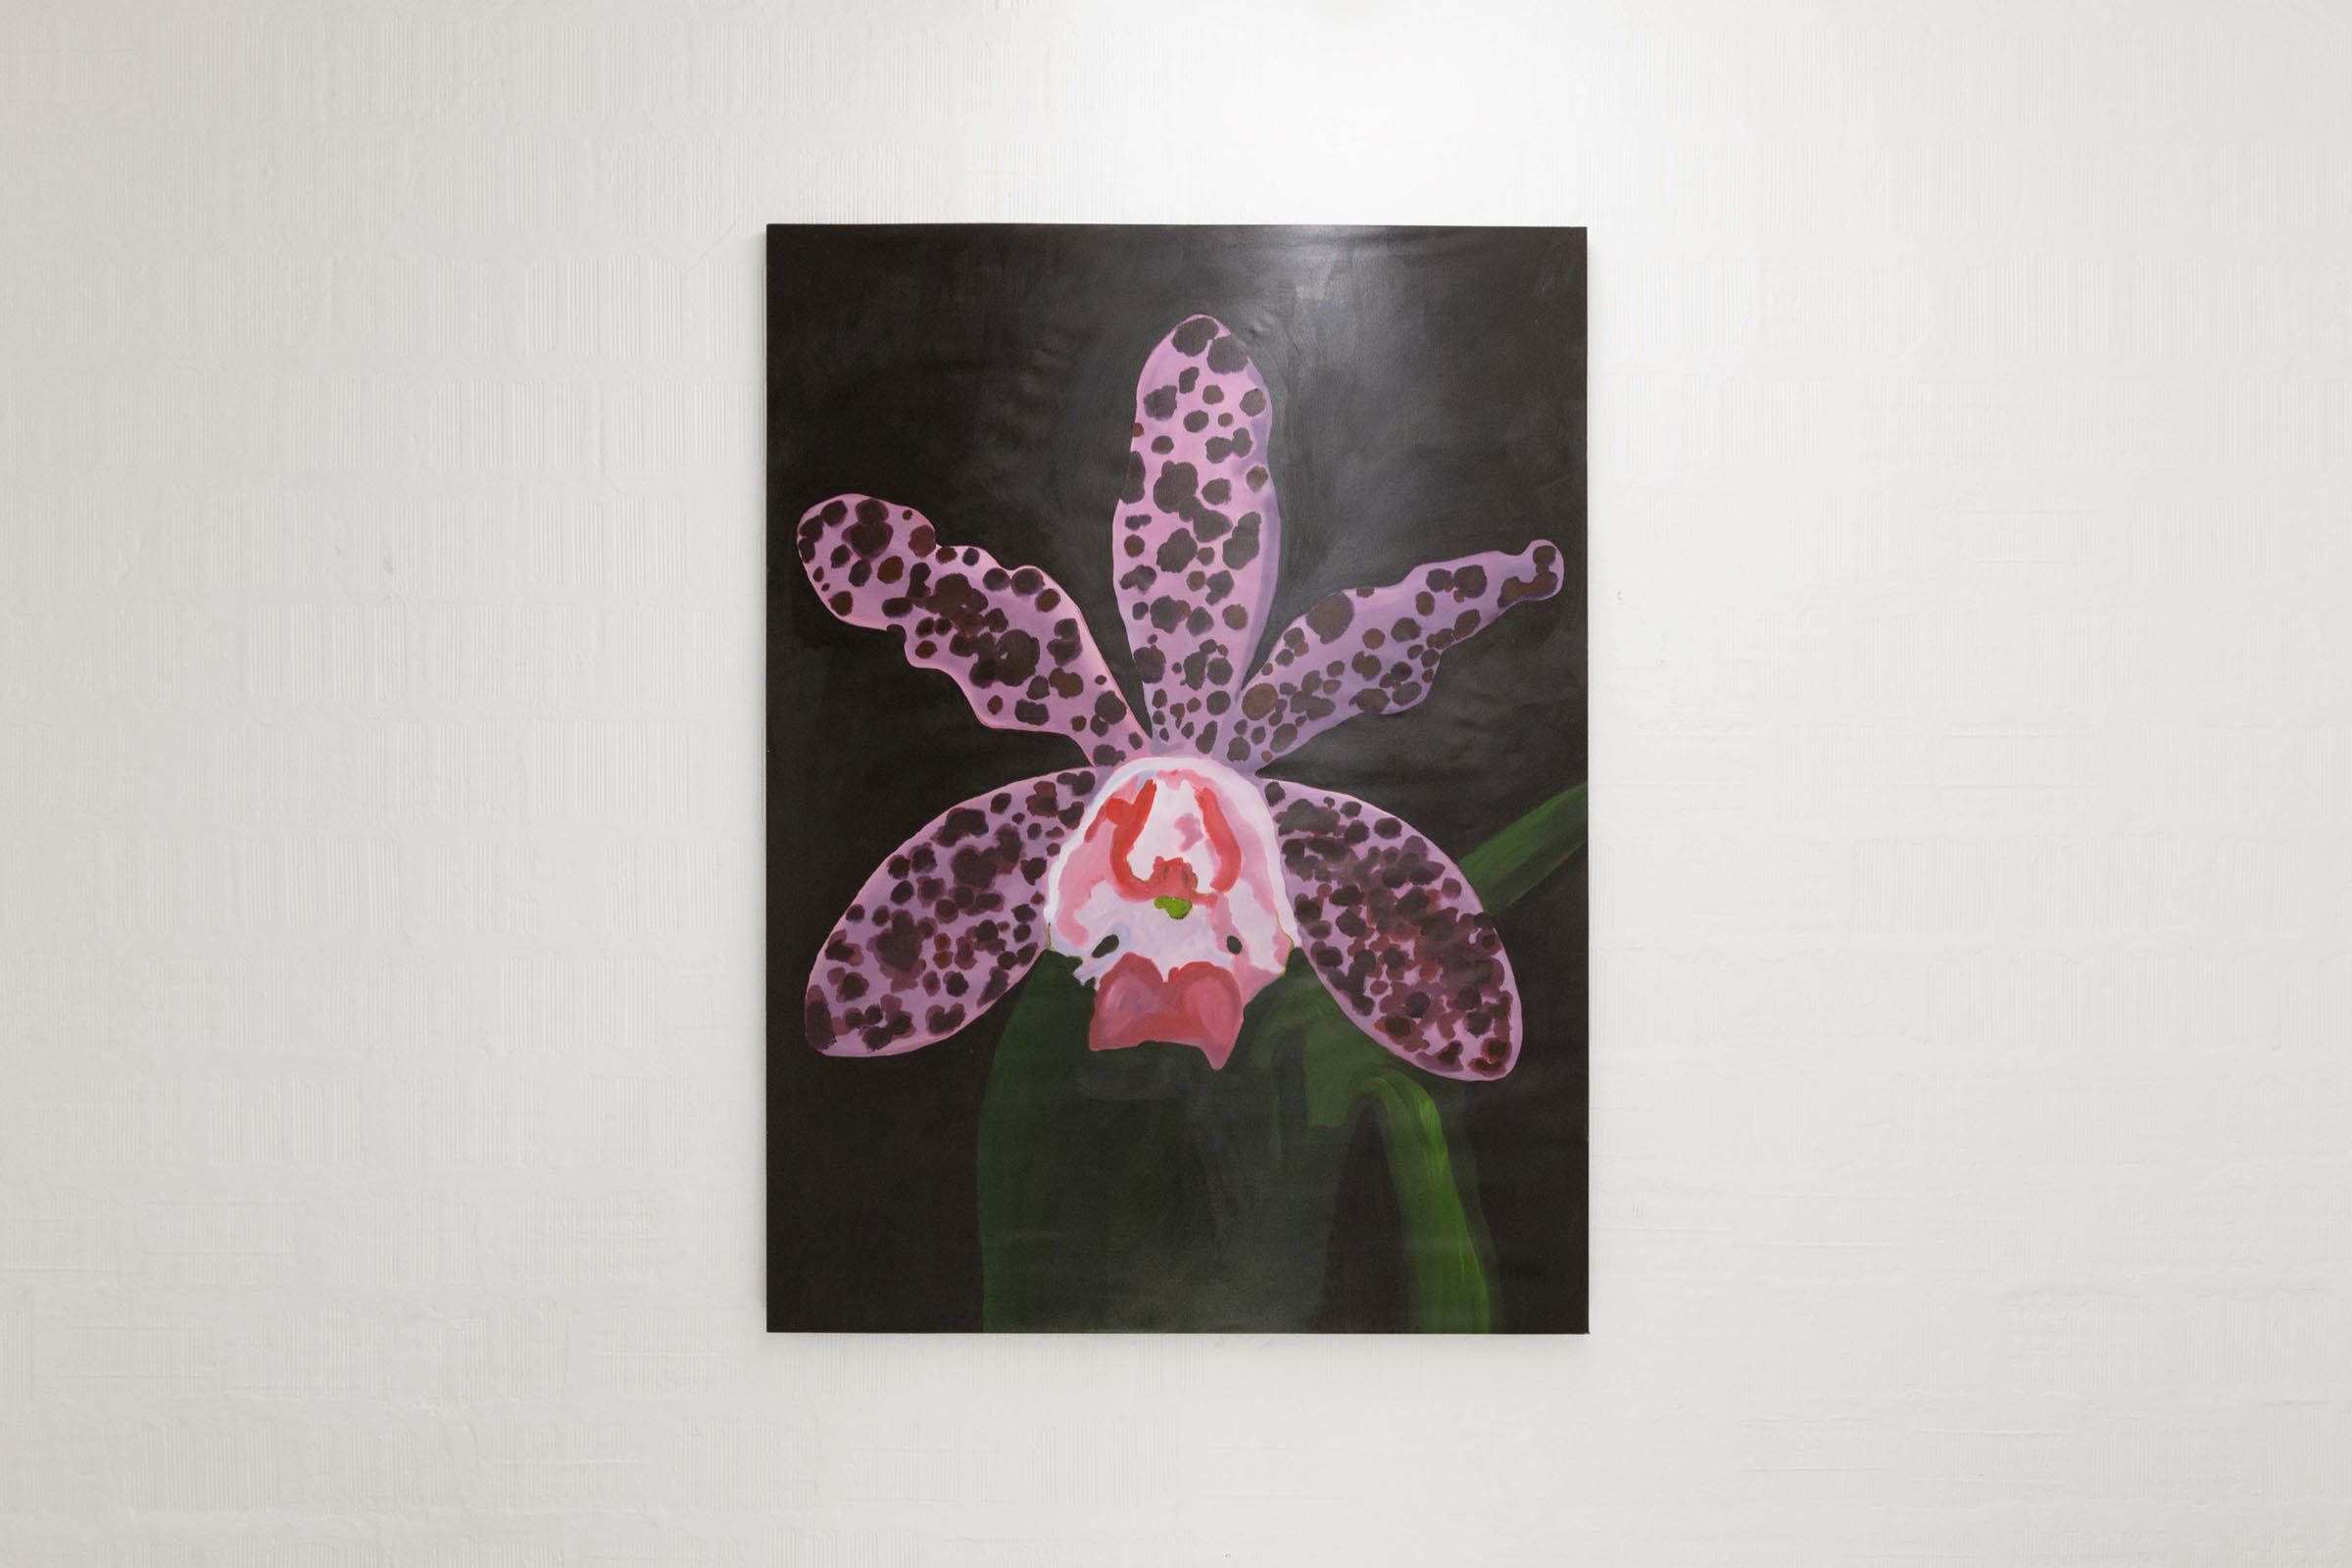 Matteo Attruia, A Flower for Piet, show view, Galleria MDL, Venice, ph. N. Covre